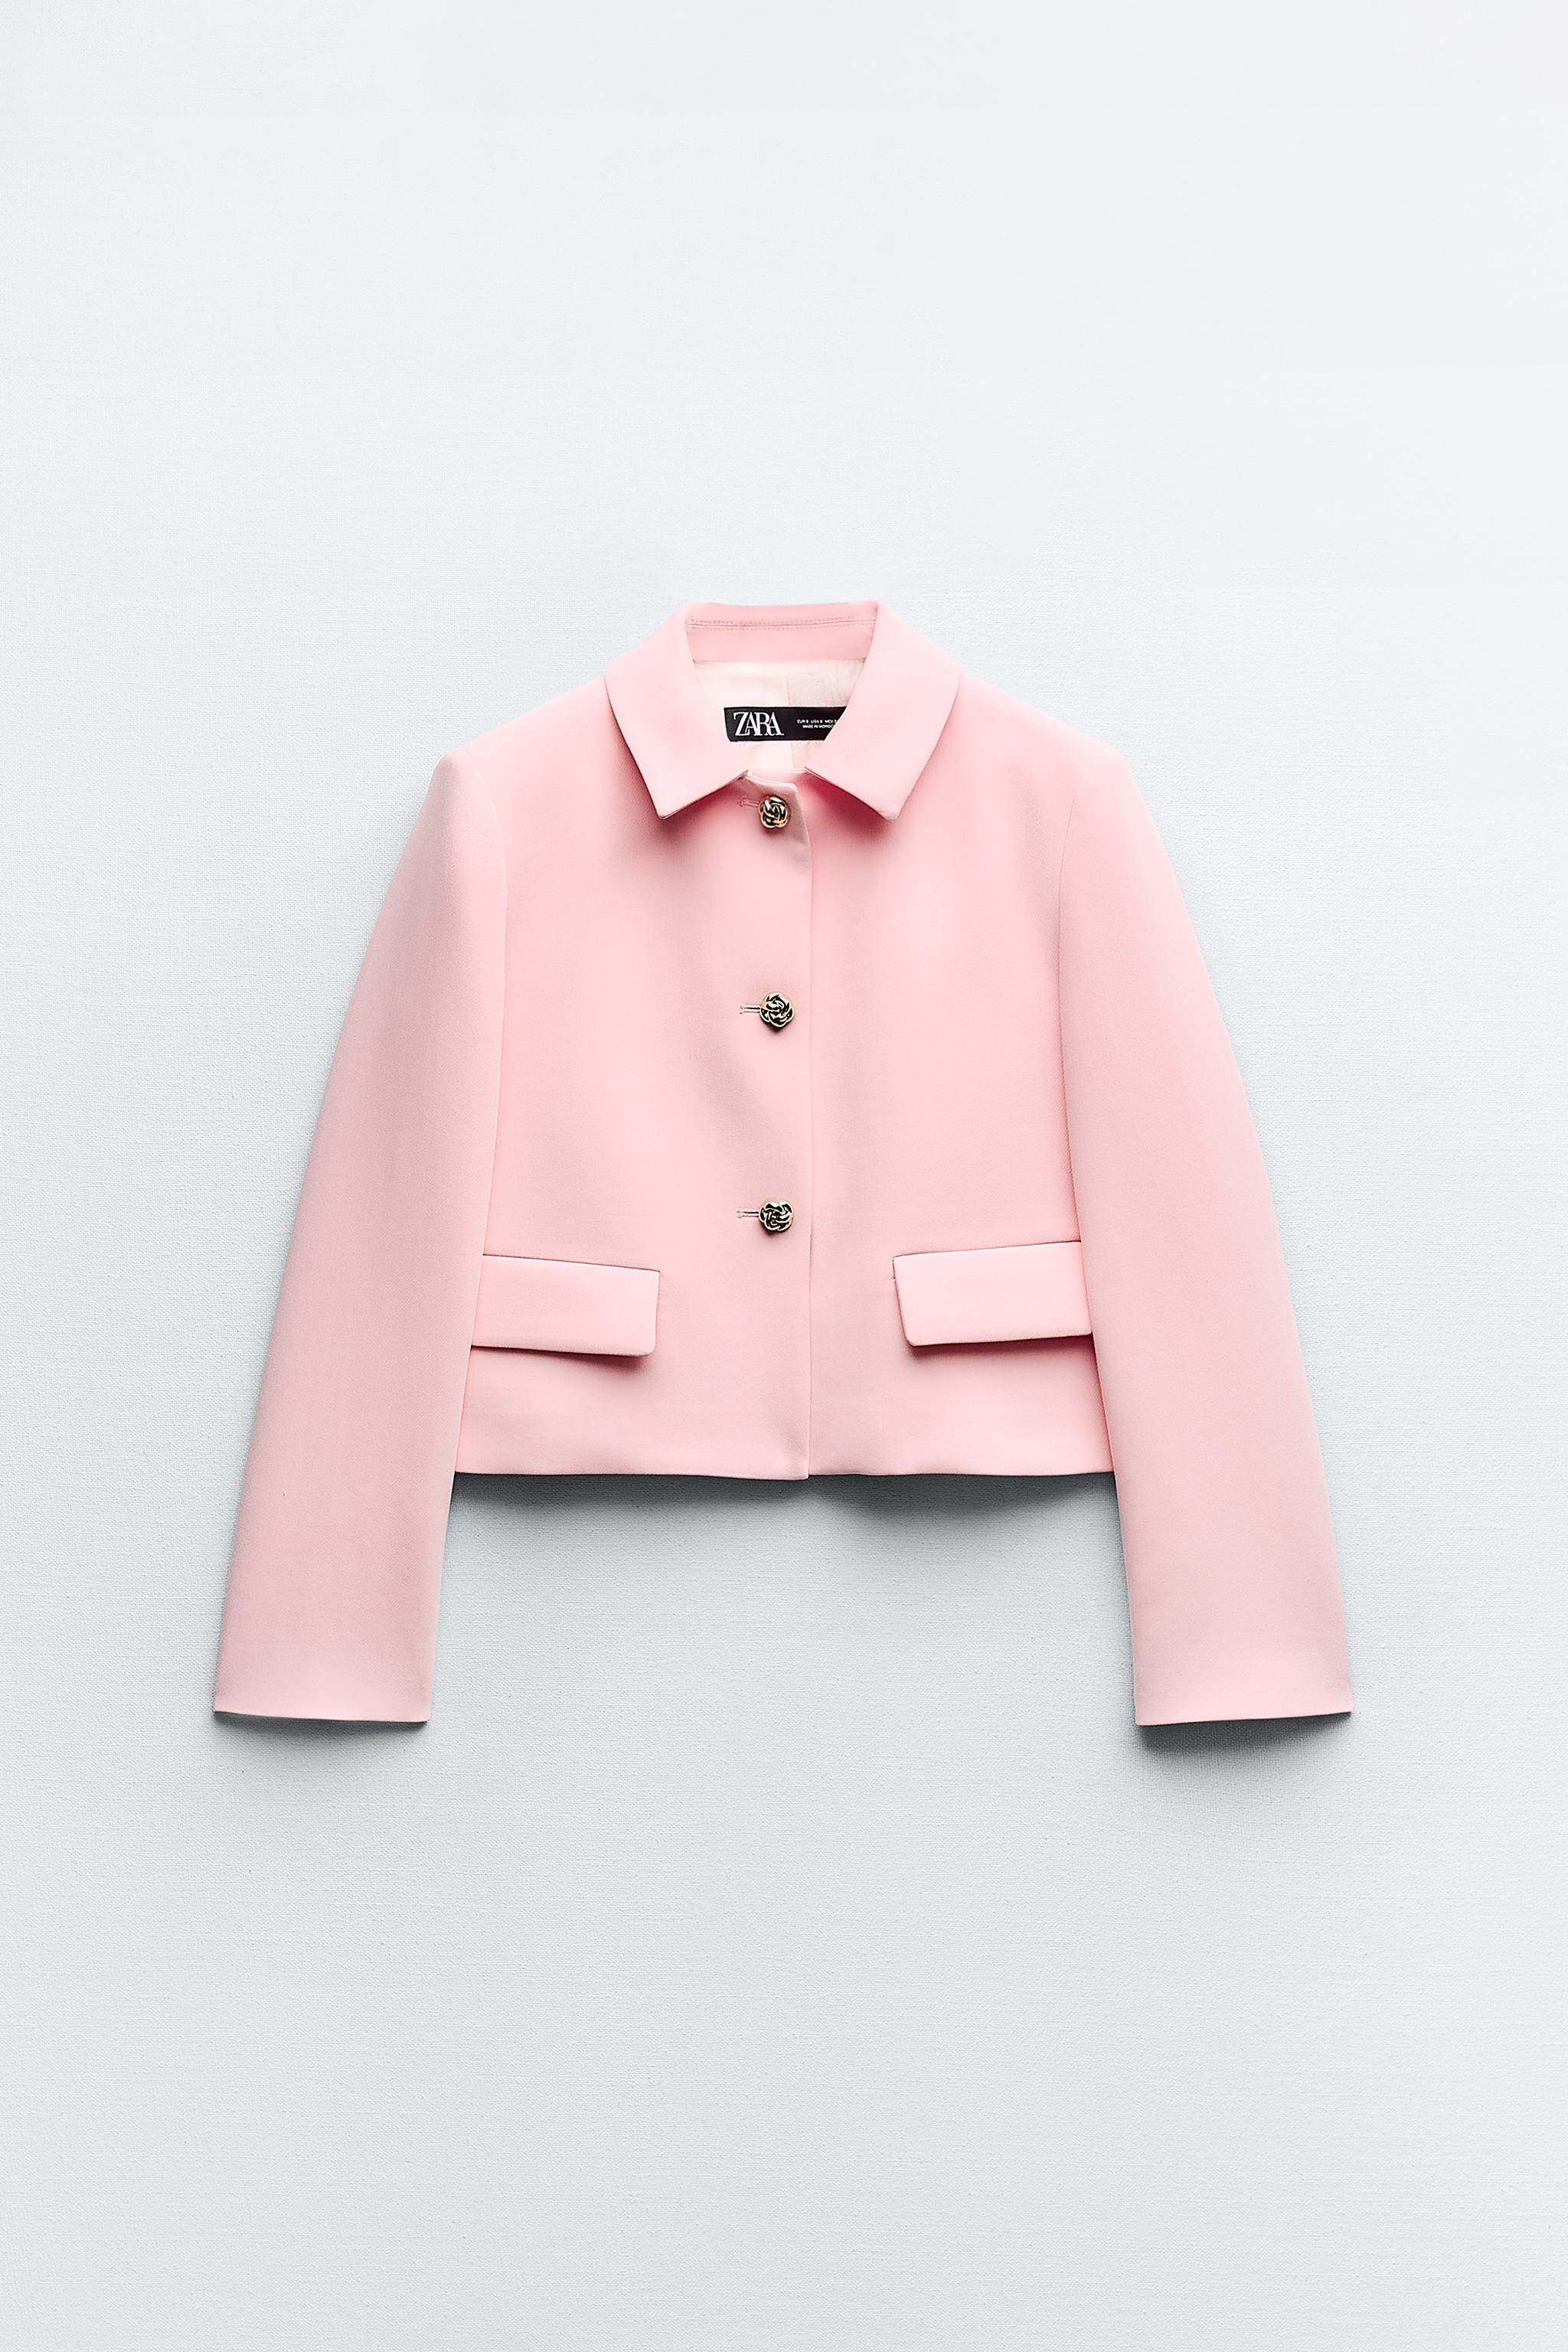 Zara Set Satin Effect Cropped Blazer and Wide Pants Pink Size XS S XL NEW